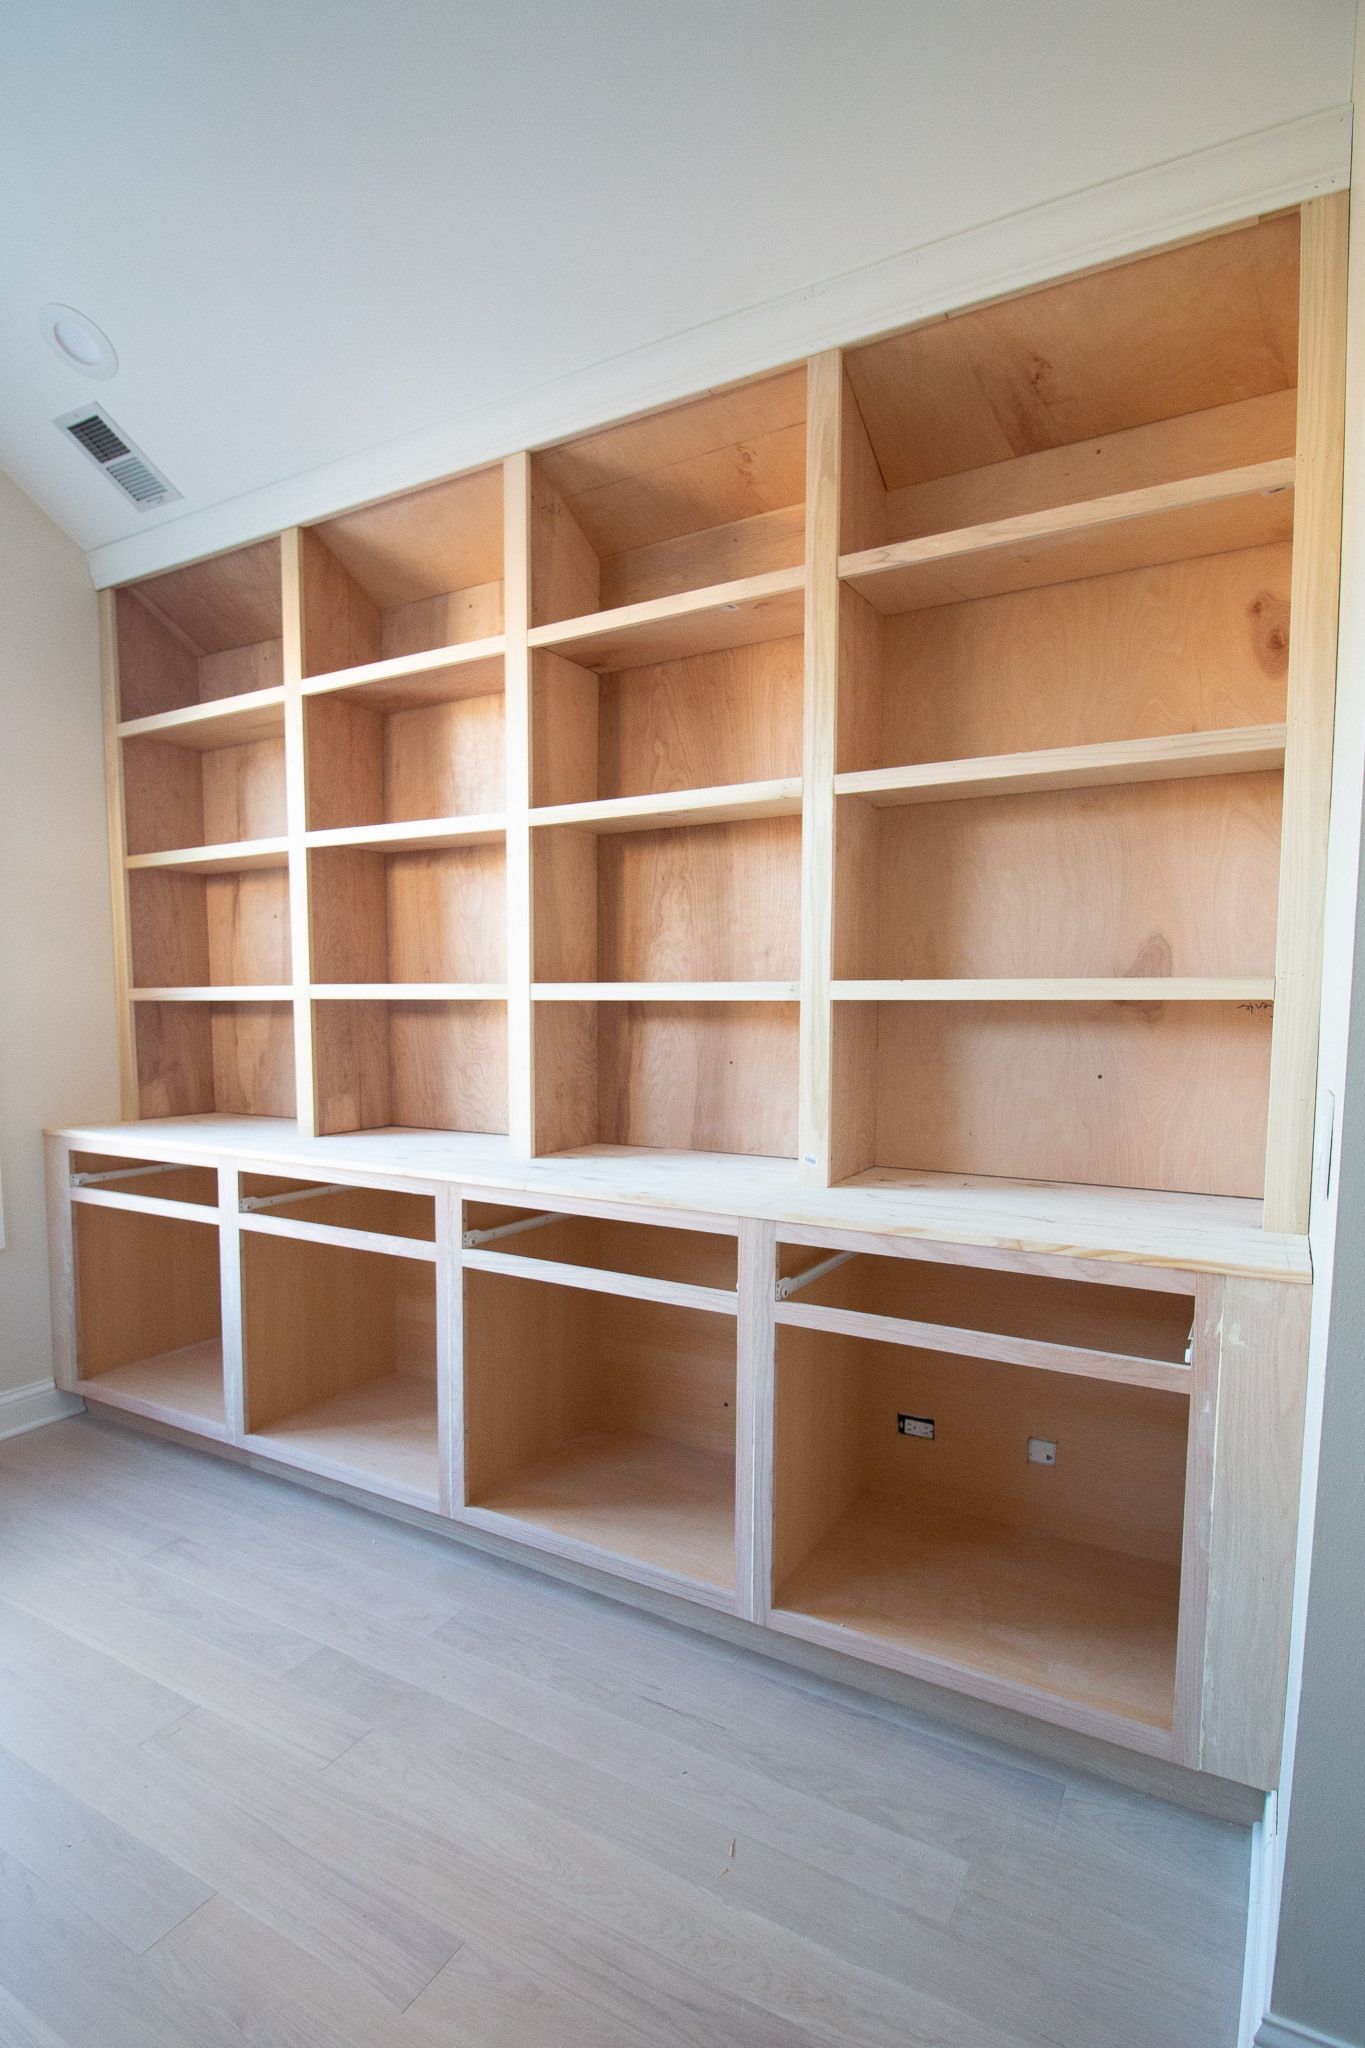 DIY Office Built-Ins with Storage | The DIY Playbook - DIY Office Built-Ins with Storage | The DIY Playbook -   18 diy Bookshelf office ideas